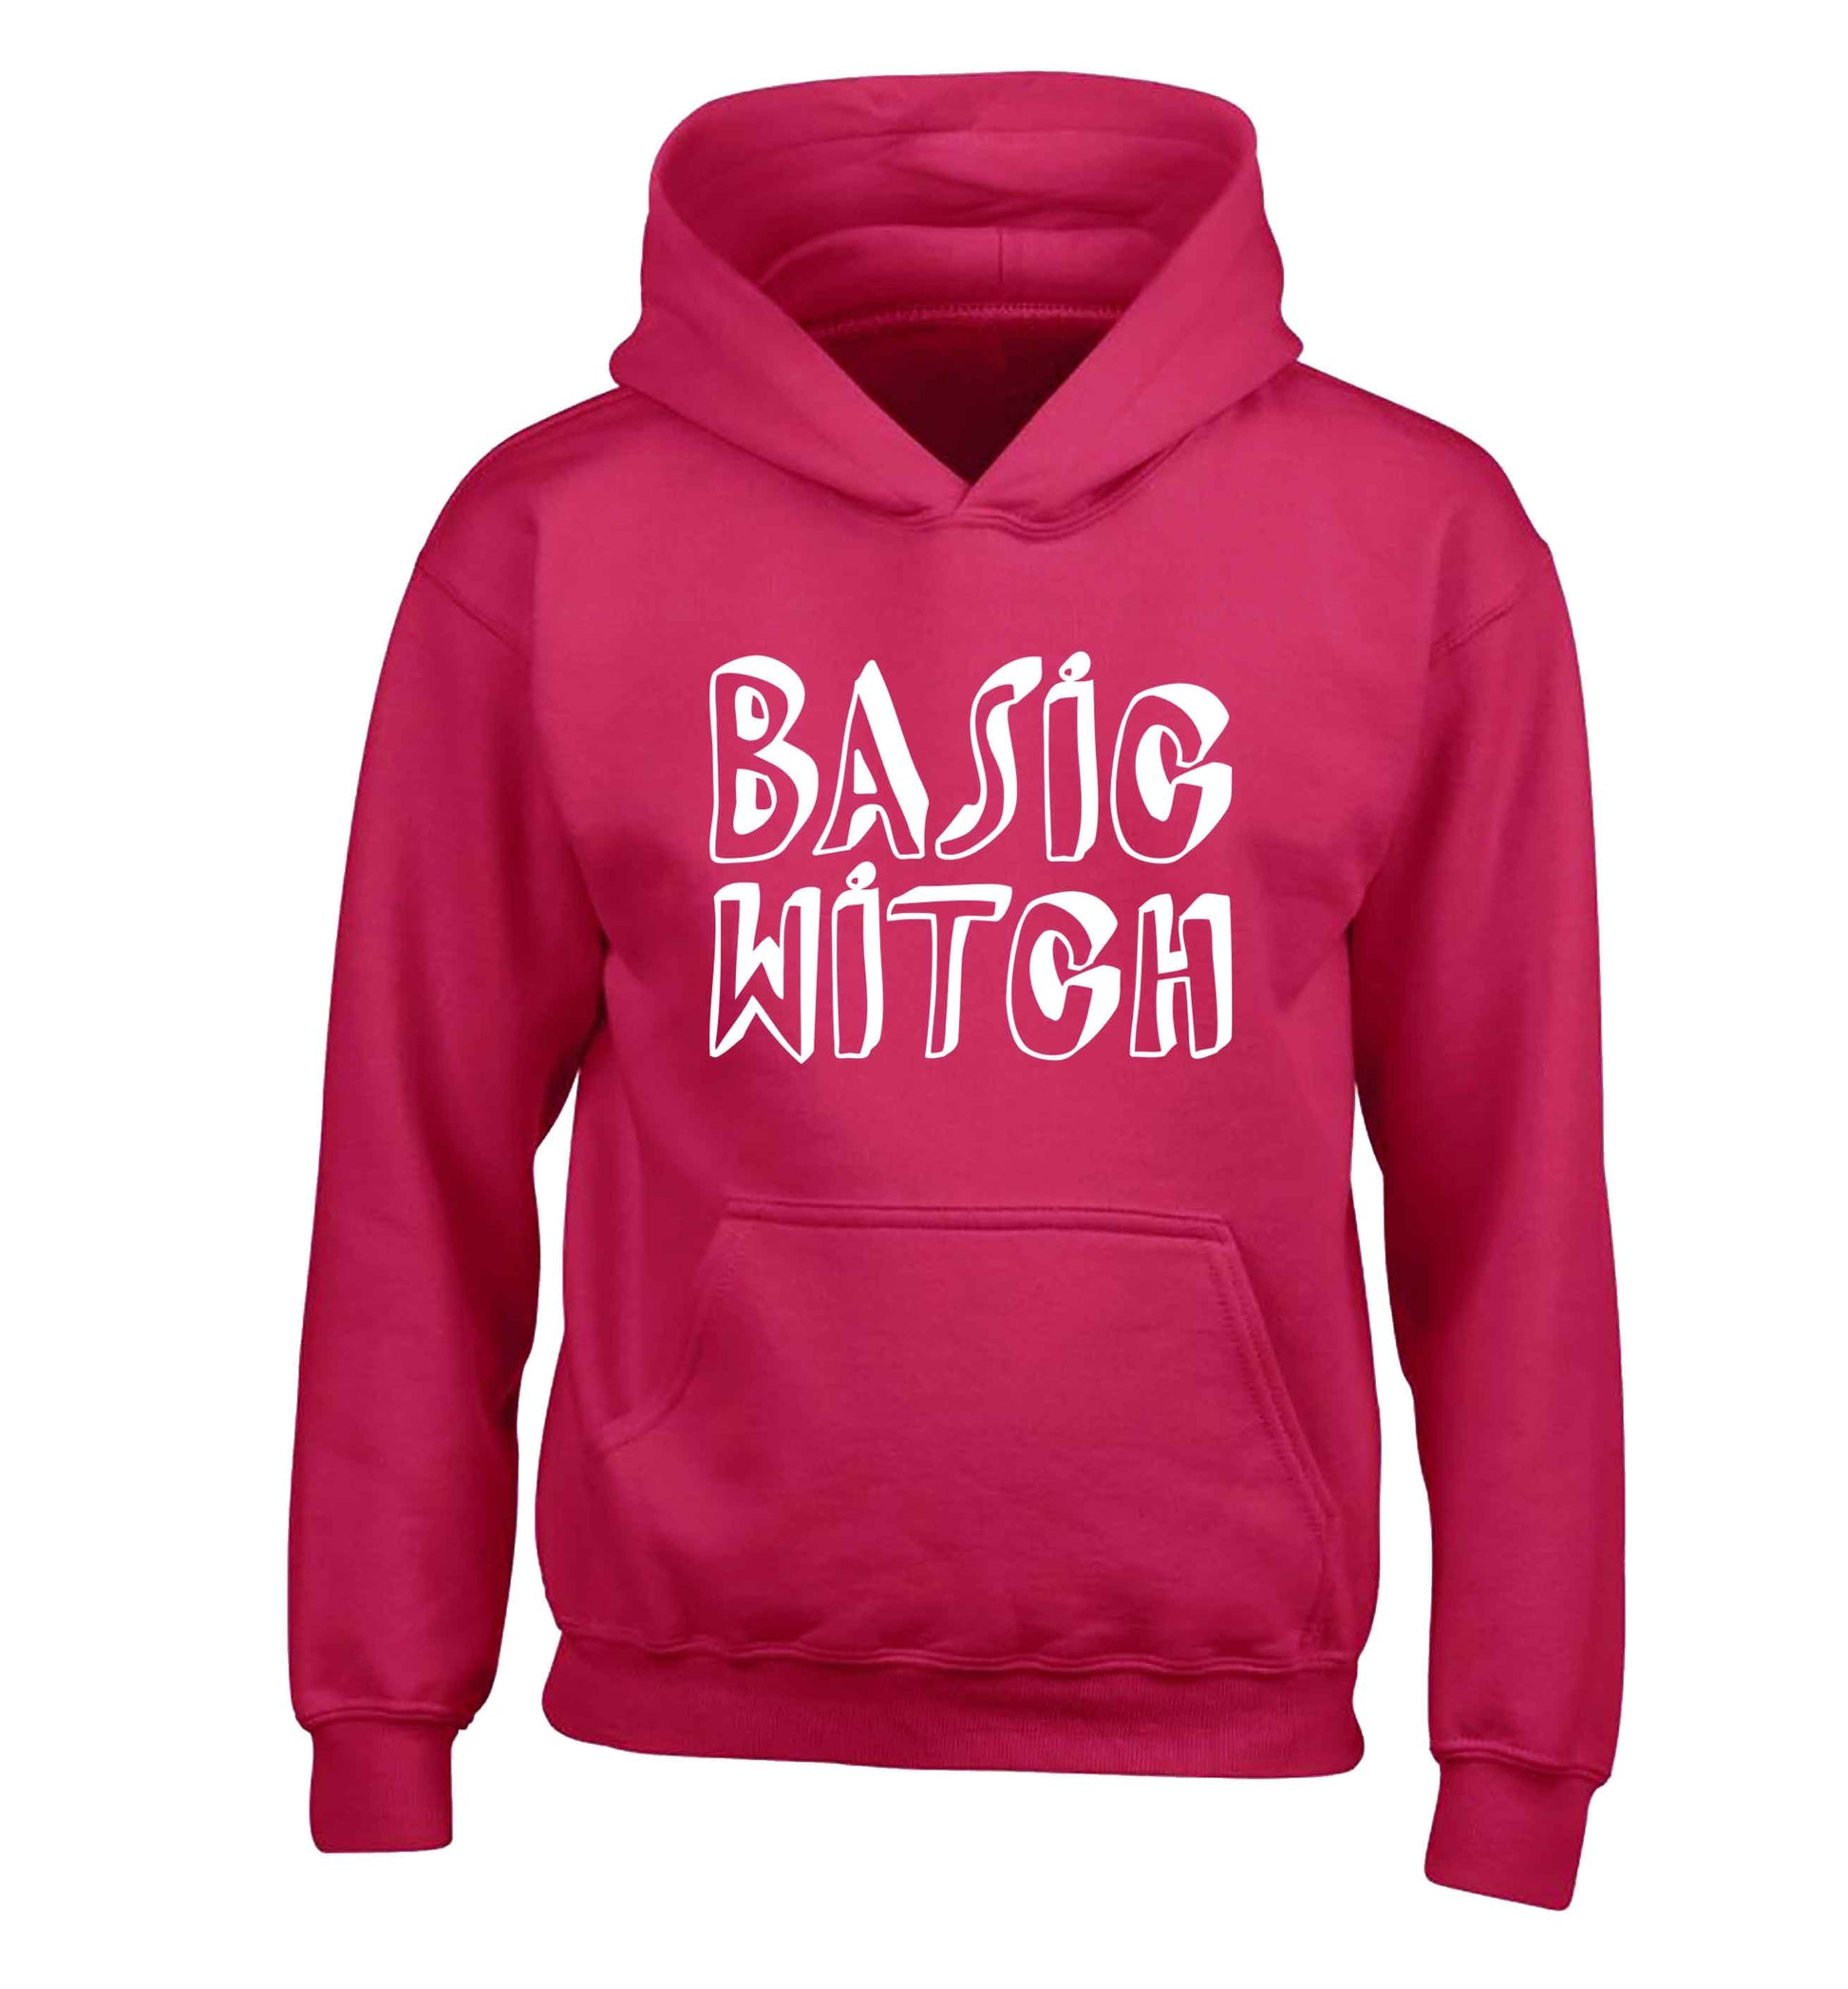 Basic witch children's pink hoodie 12-13 Years